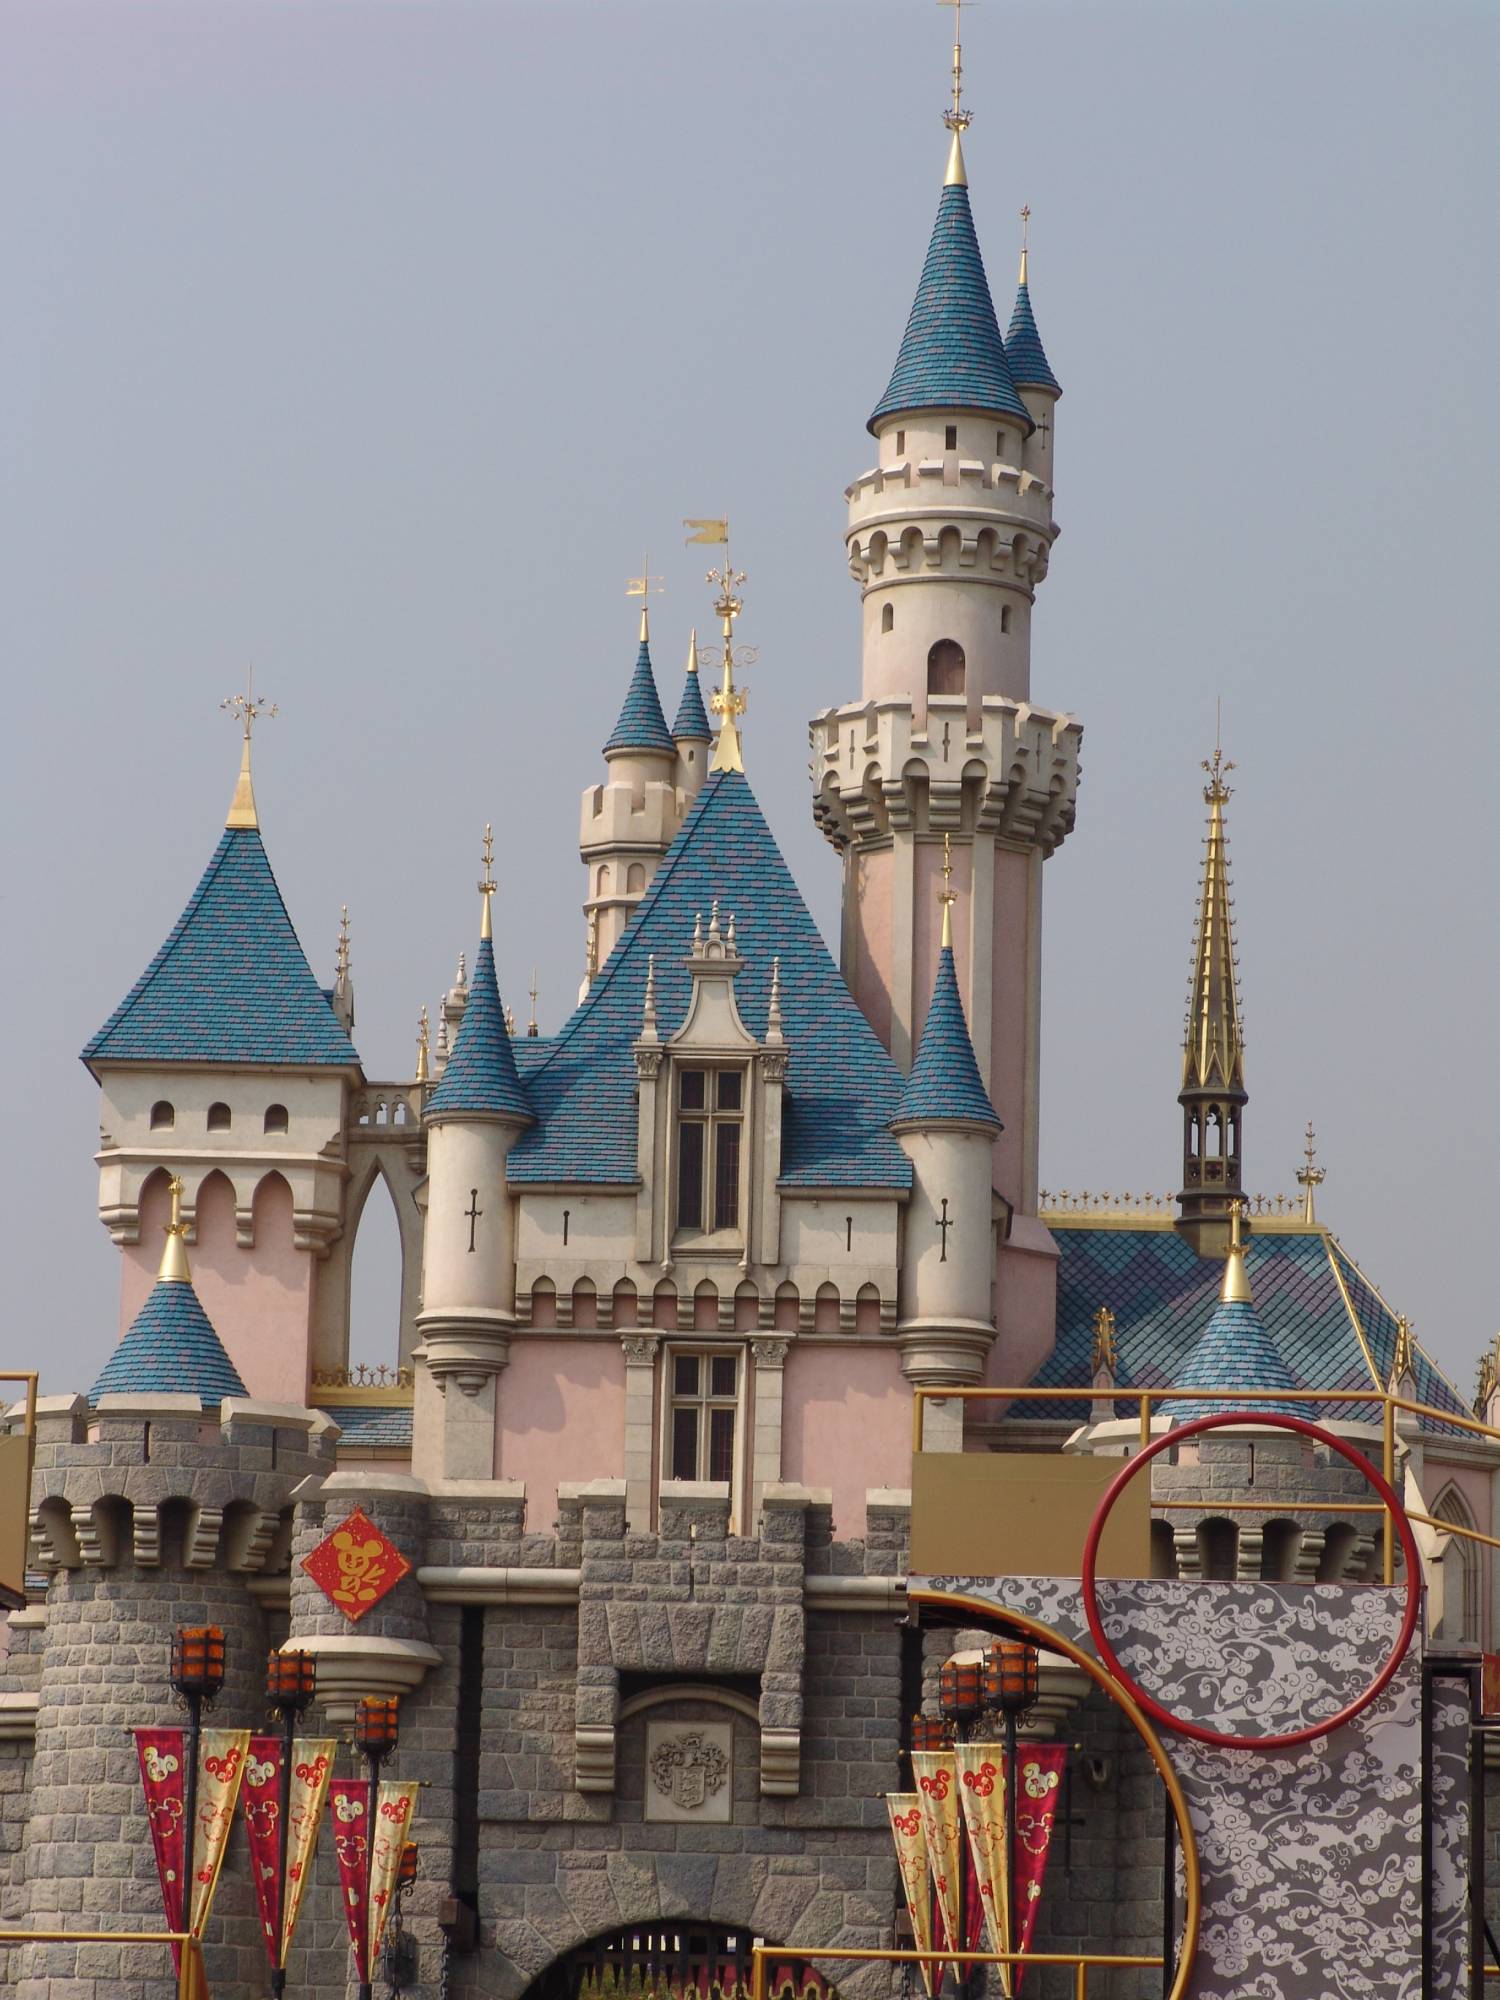 Hong Kong Disneyland - Sleeping Beauty Castle